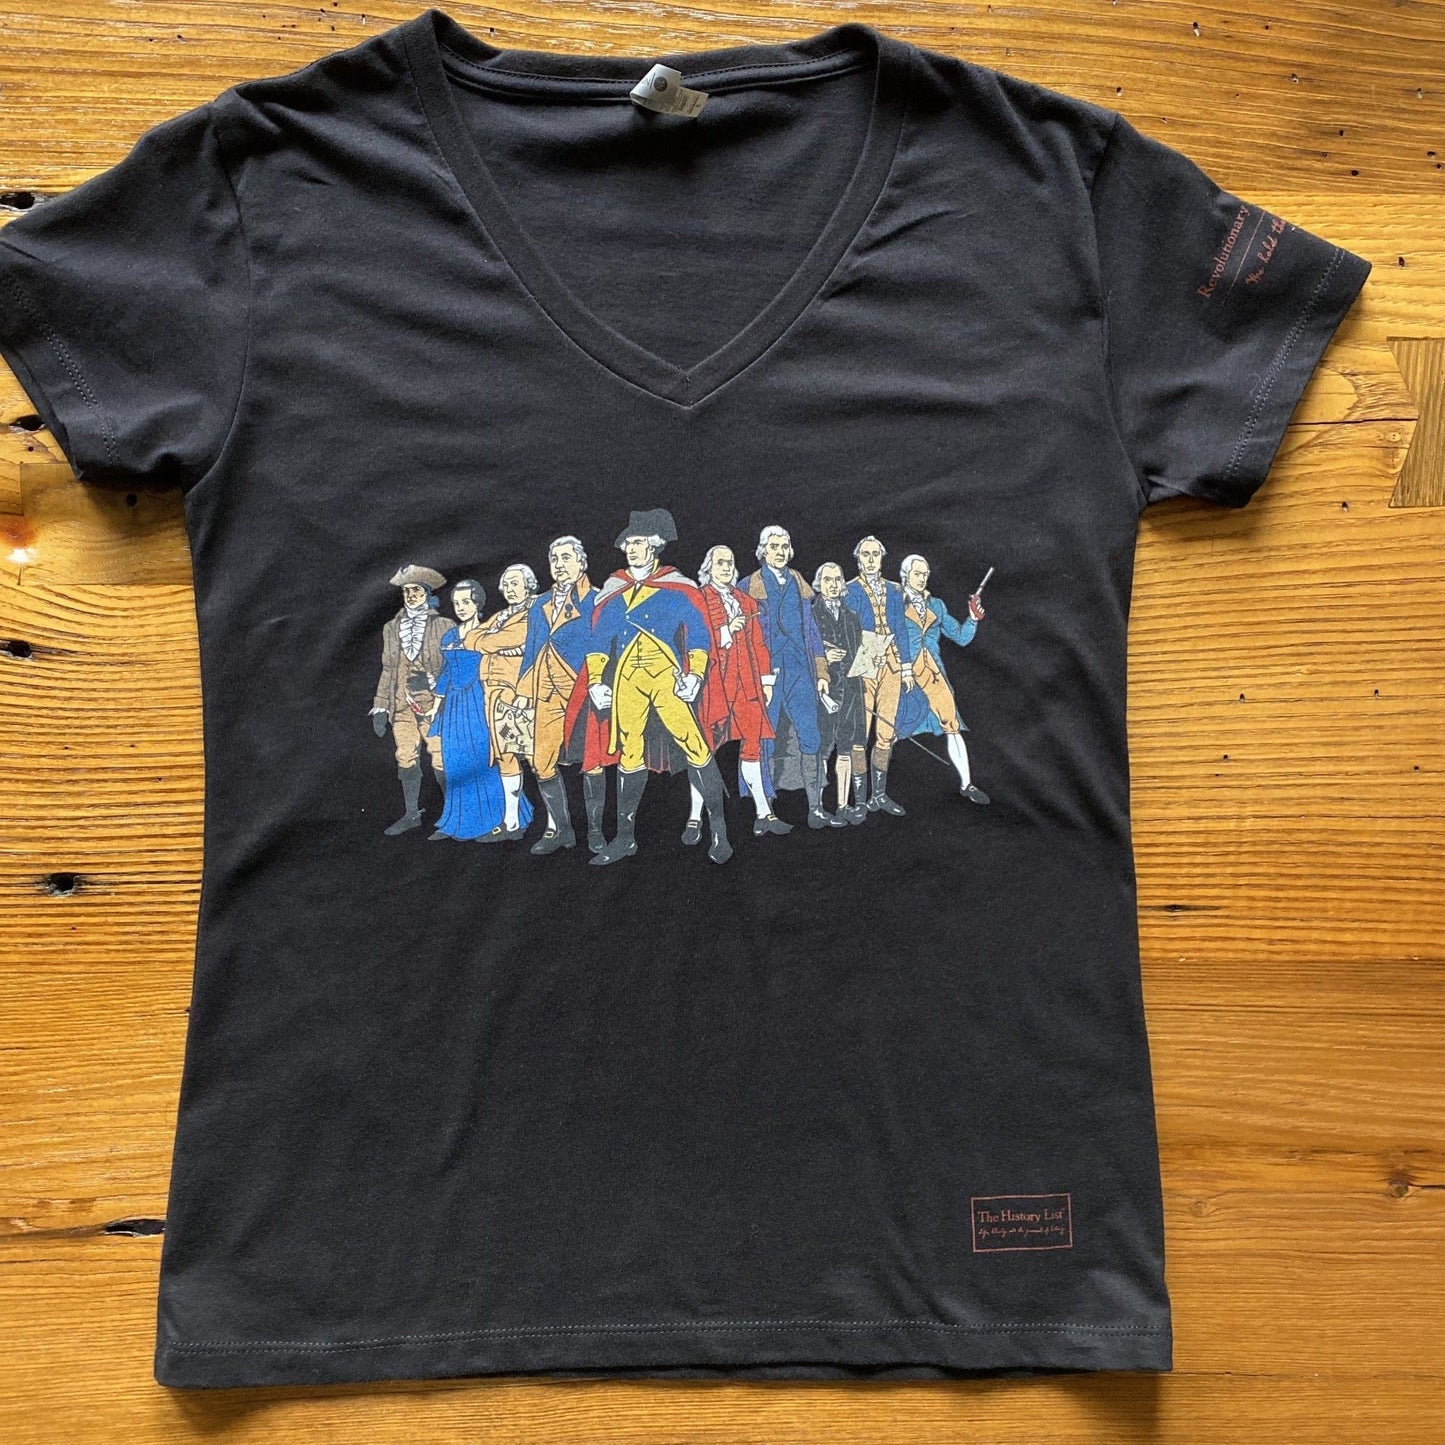 Ten "Revolutionary Superheroes" V-neck shirt from the History List Store